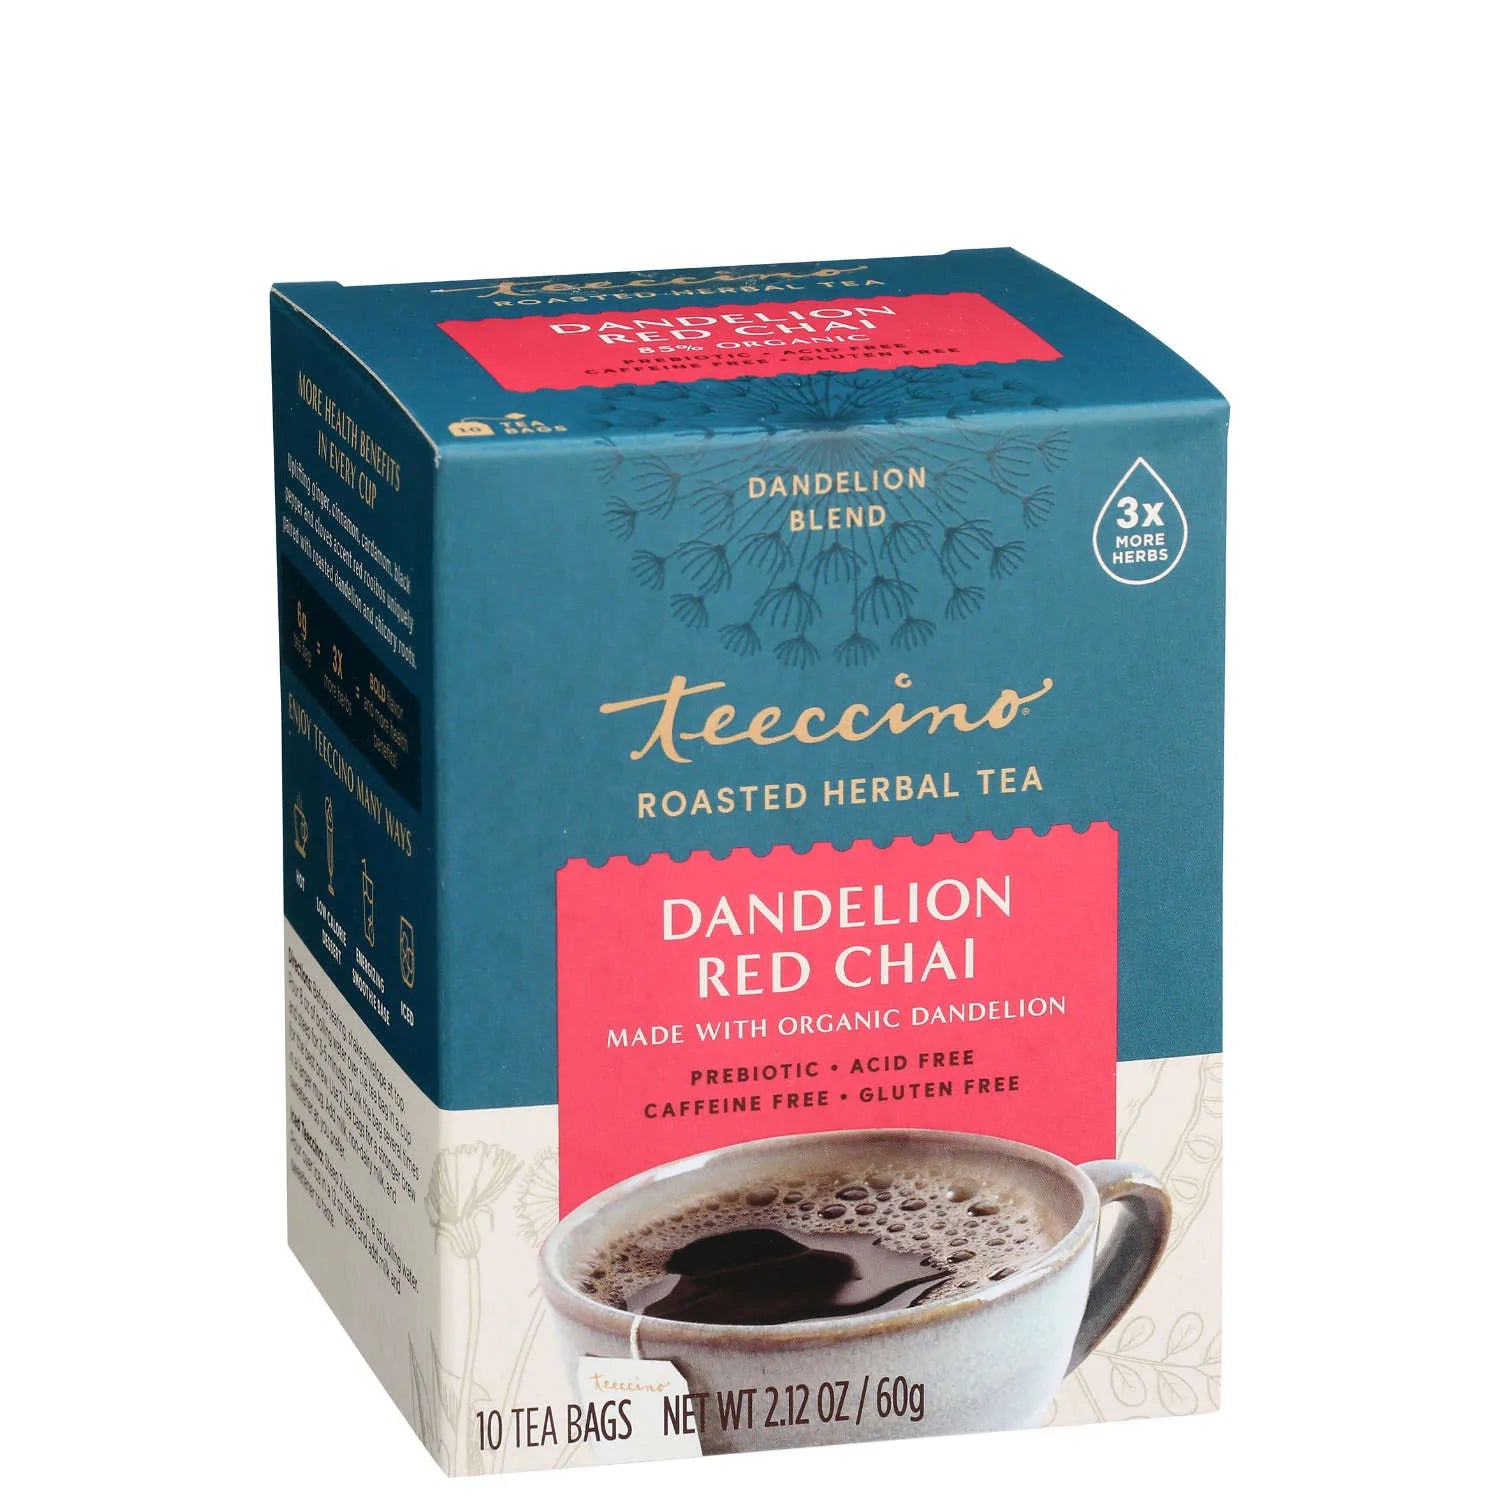 Teeccino Dandelion Red Chai Roasted Herbal Tea 10tbags